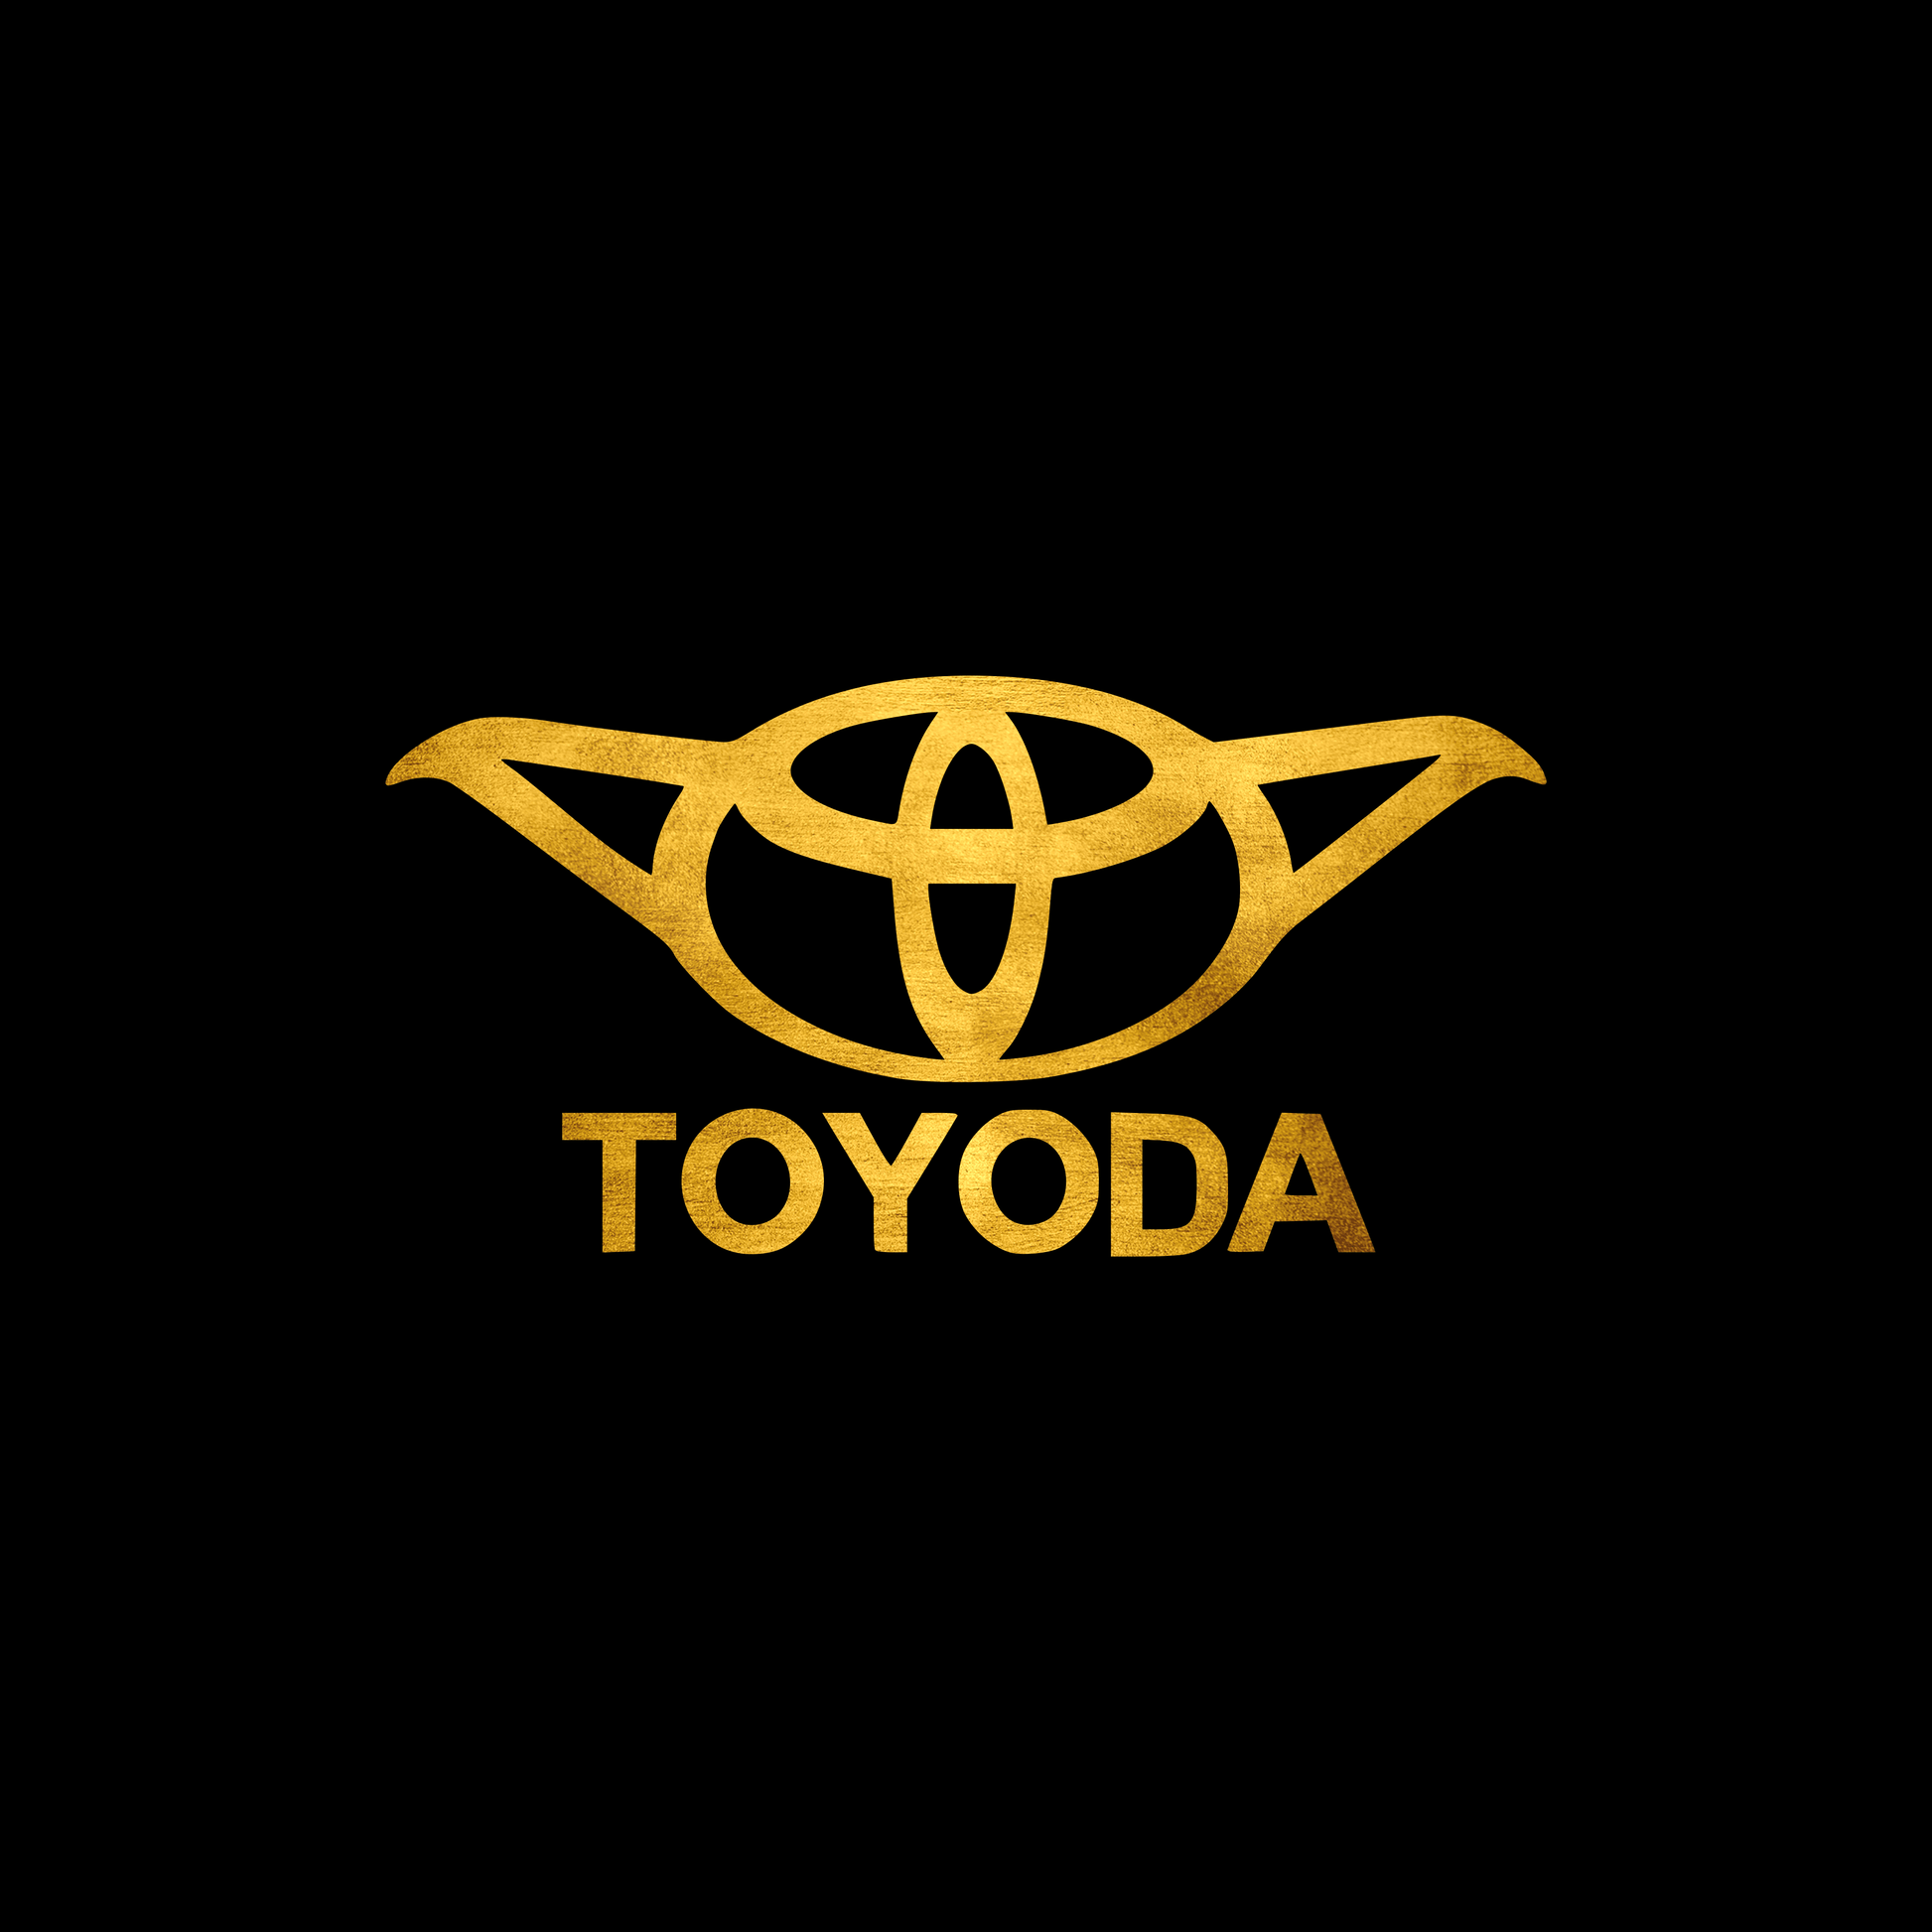 Toyoda sticker decal